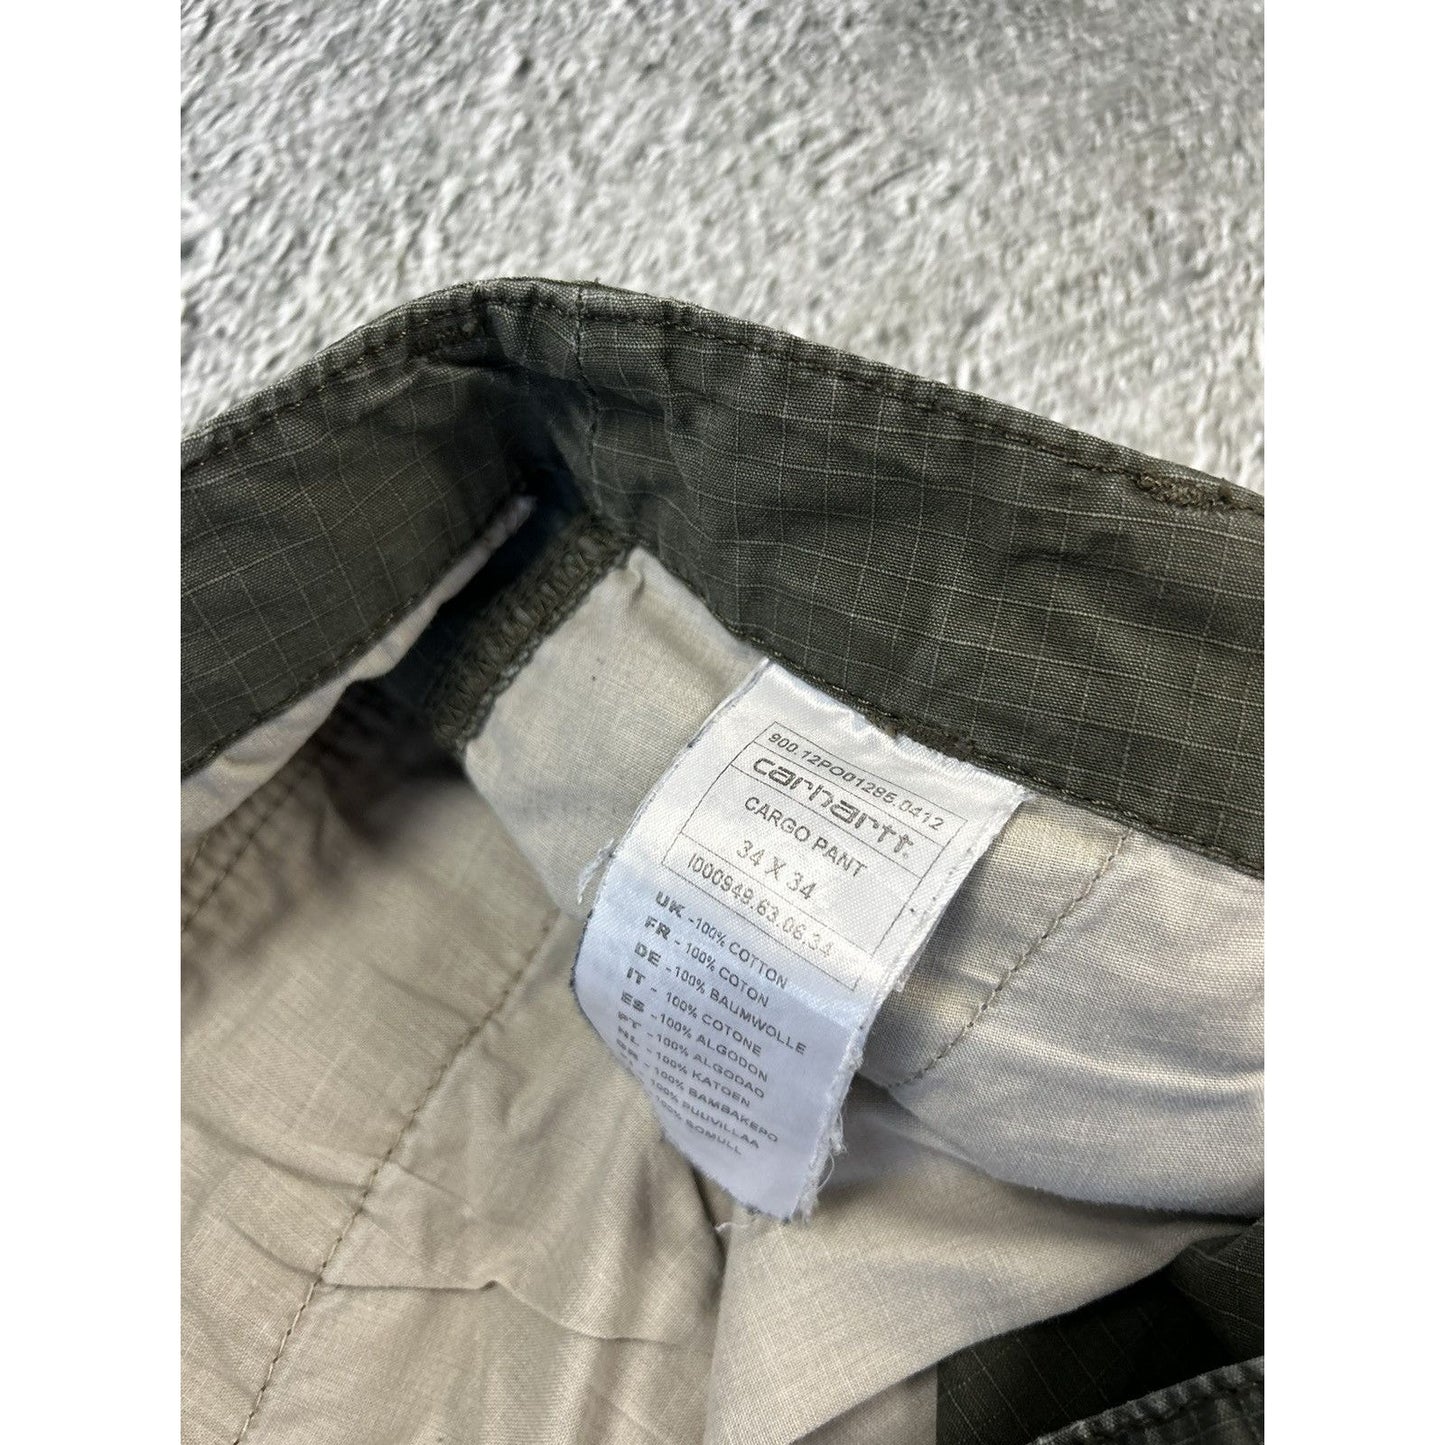 Carhartt vintage cargo pants khaki workwear regular baggy